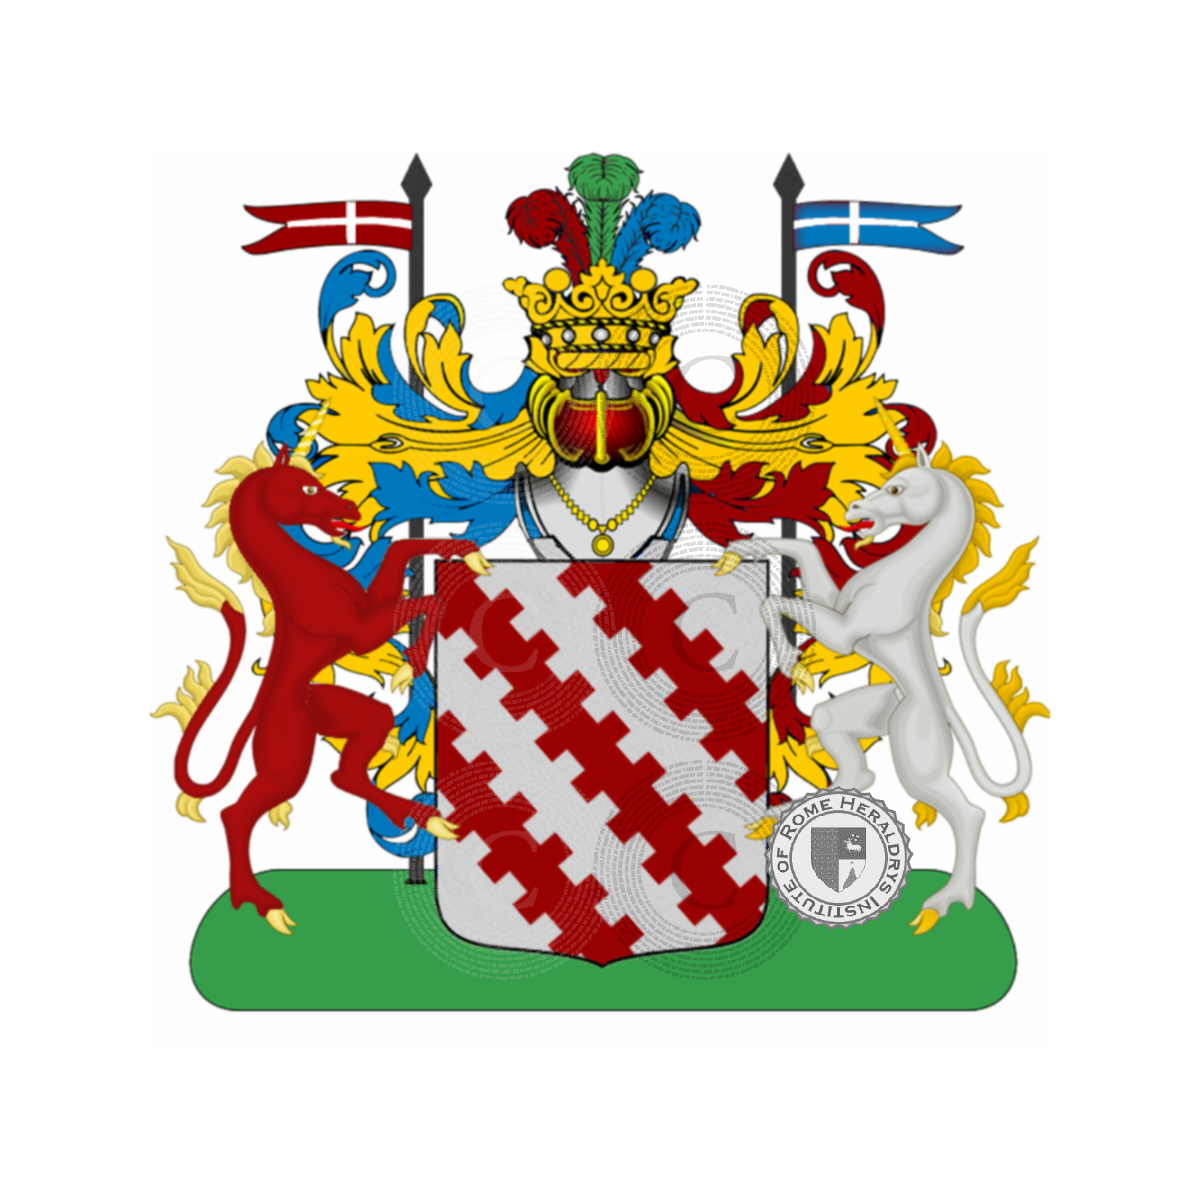 Wappen der FamilieSalviati